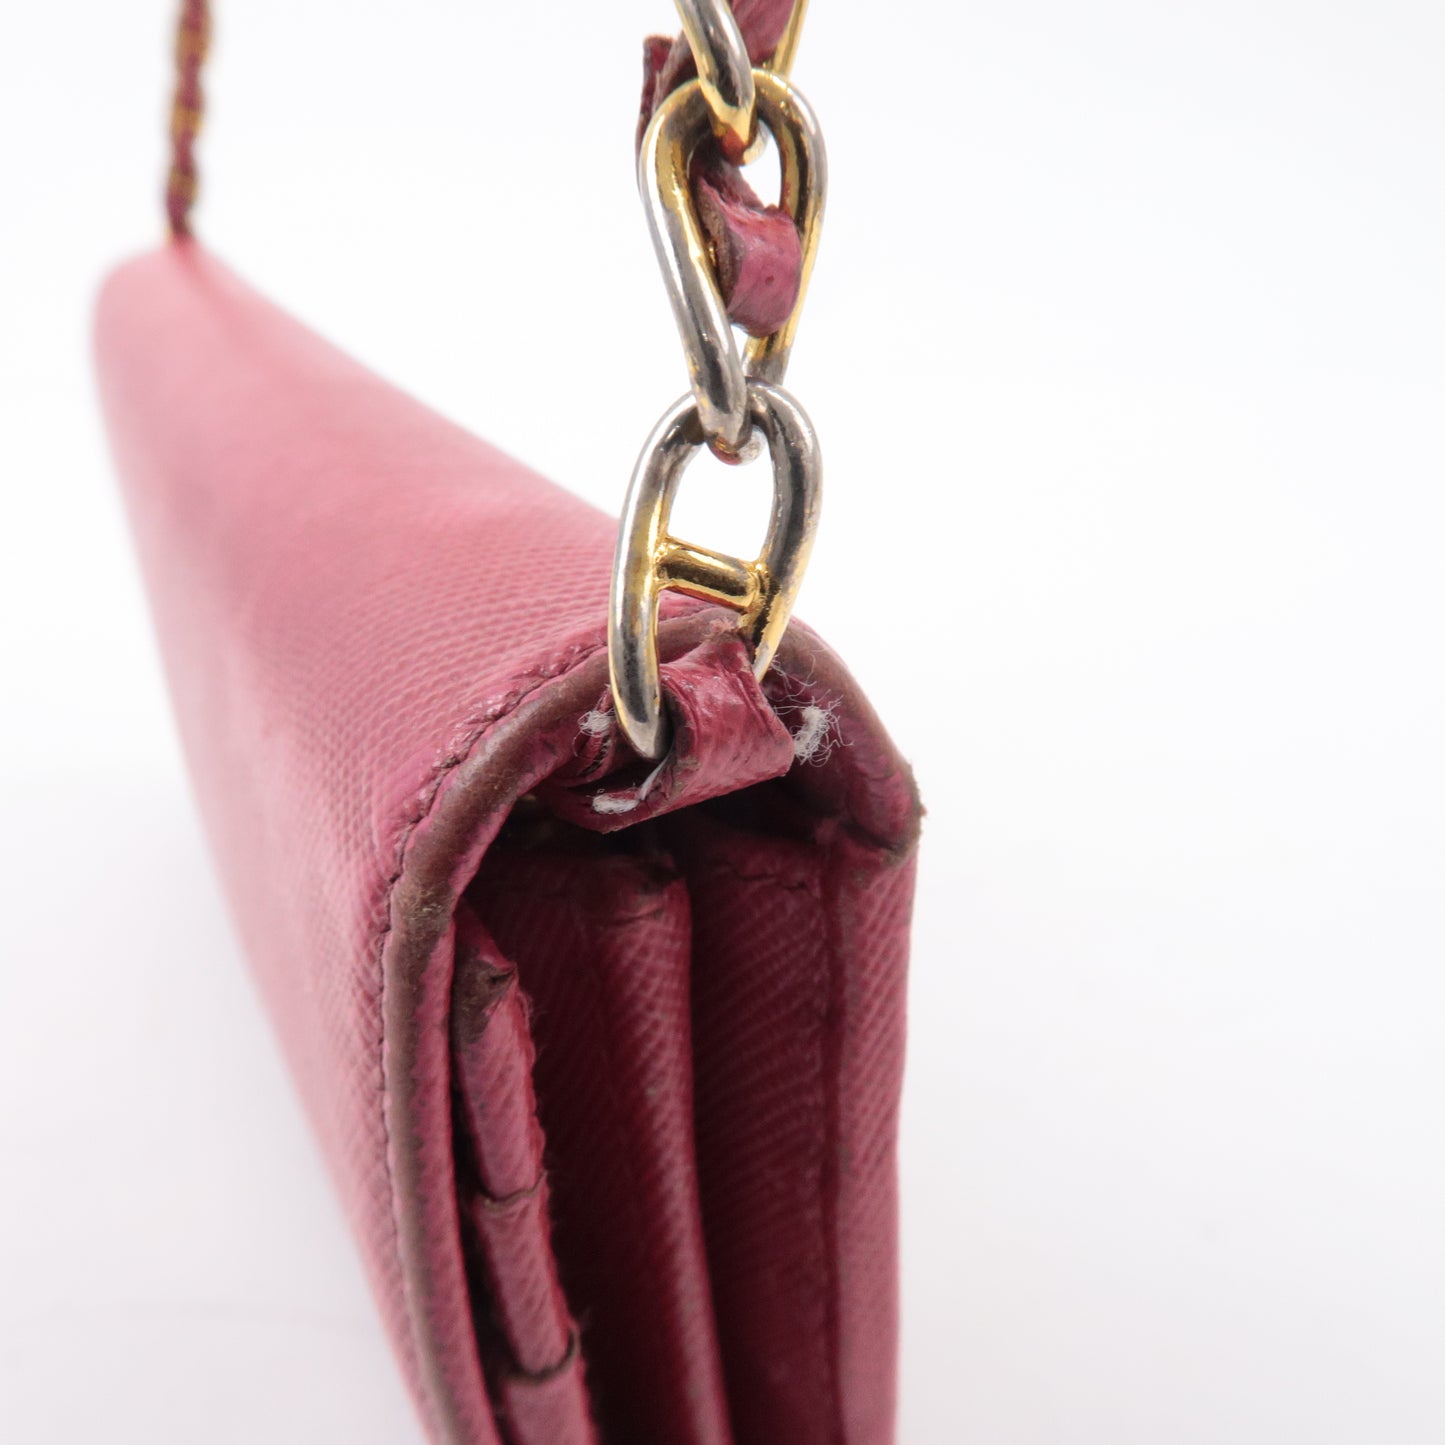 PRADA Saffiano Metal Chain Wallet Pink 1M1290